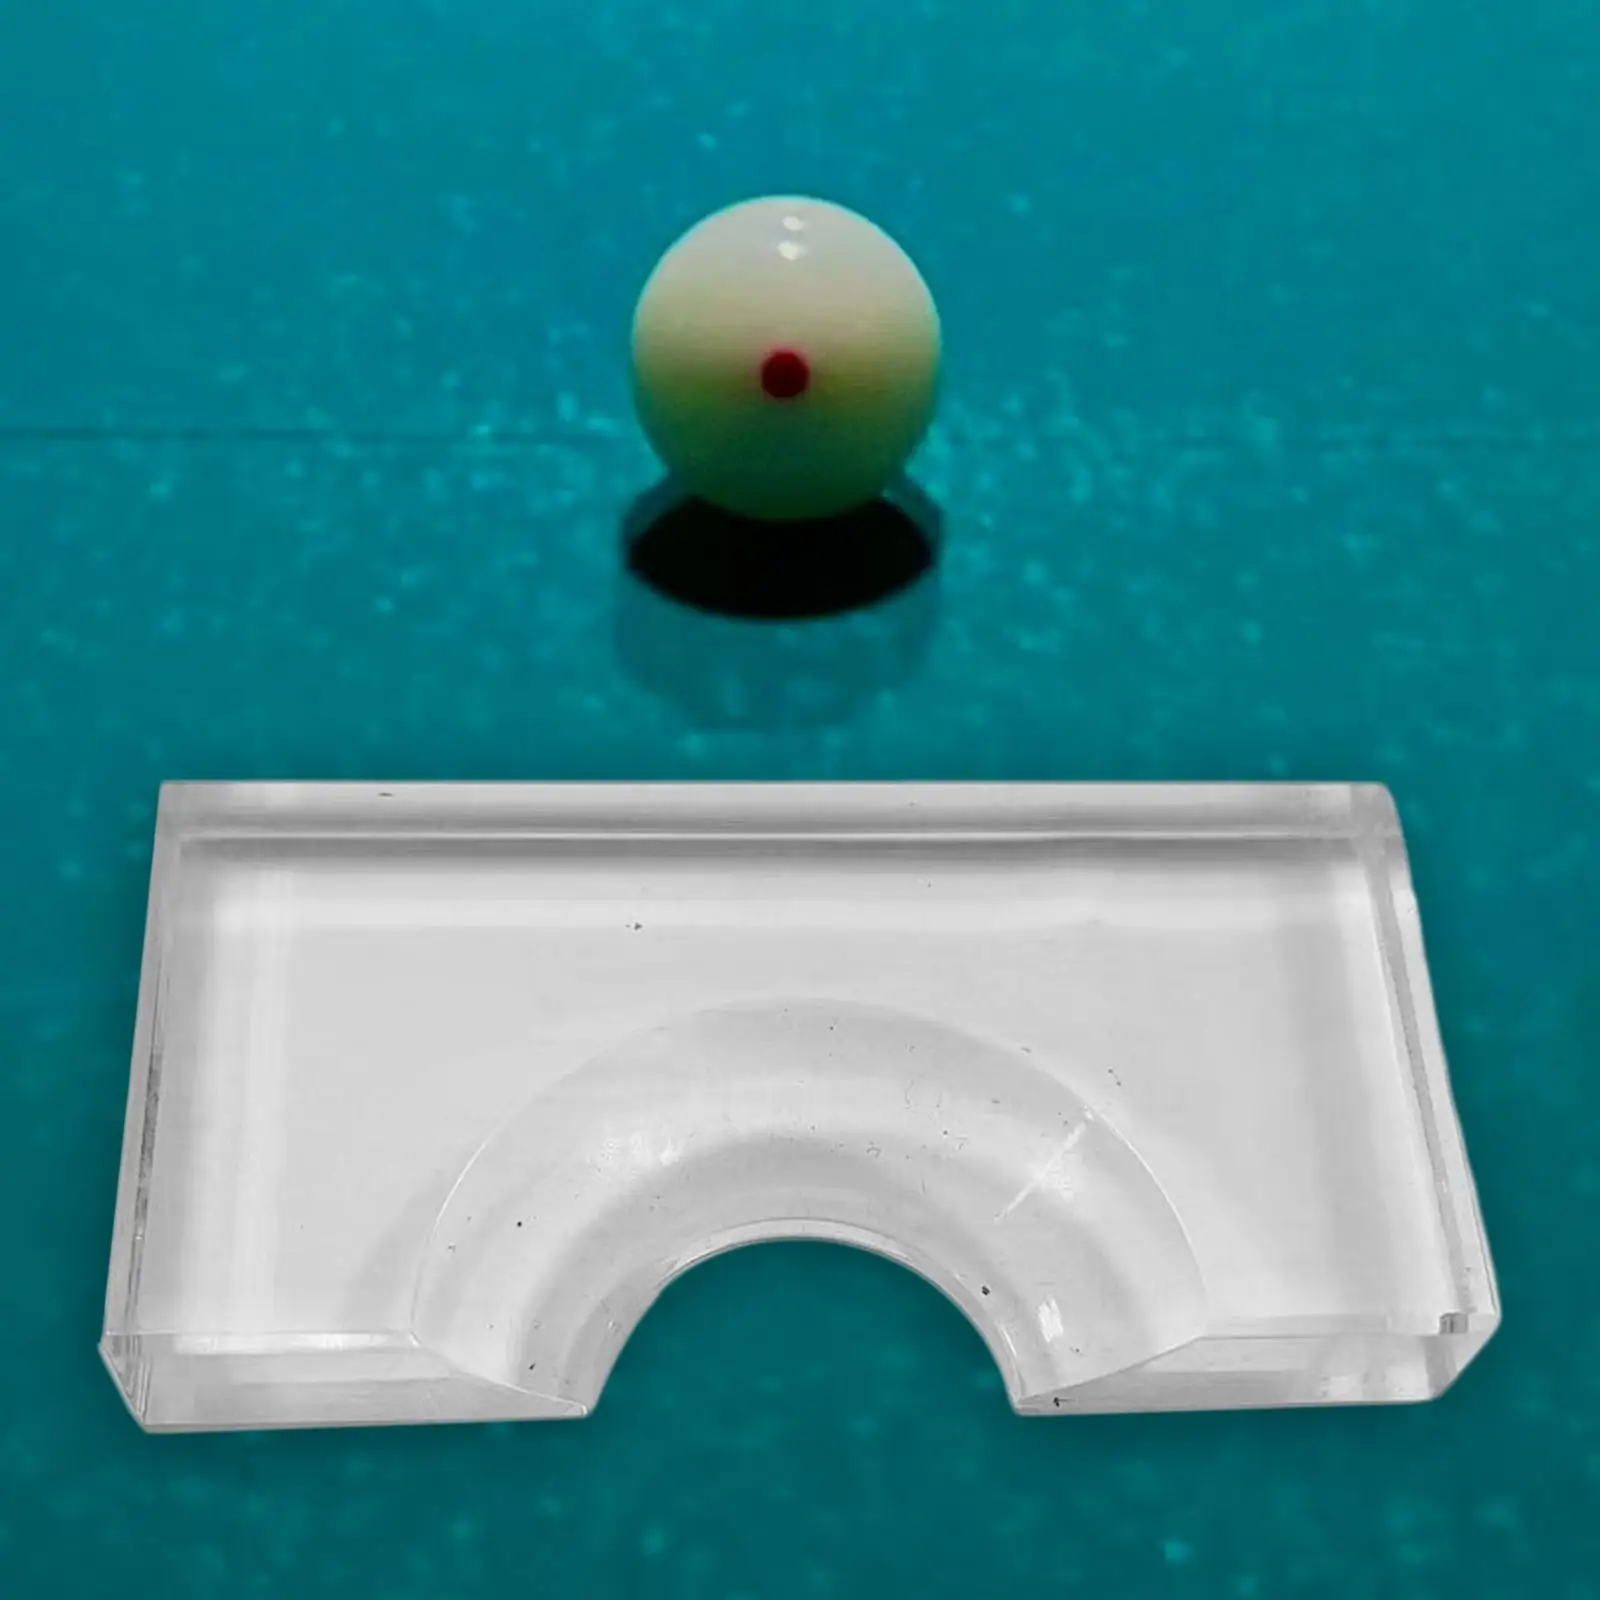 Billiard Positioning Table Snooker Ball Positioning, Acrylic, Snooker Ball Holder, Billiard Balls Position Marker for Pub